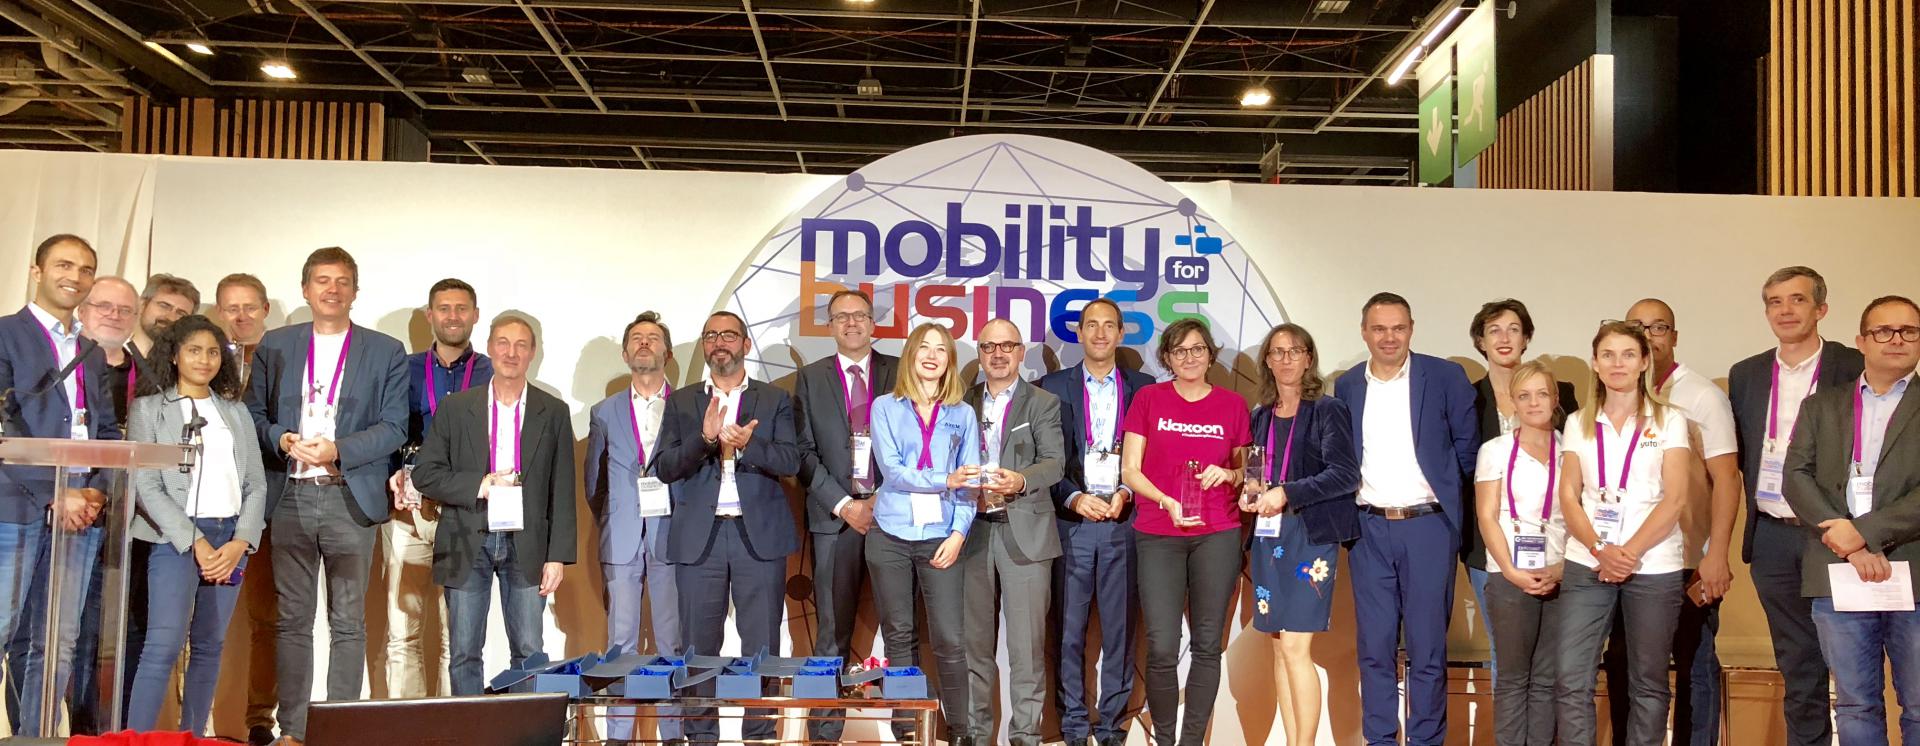 Mobility For Business décerne ses mobility awards